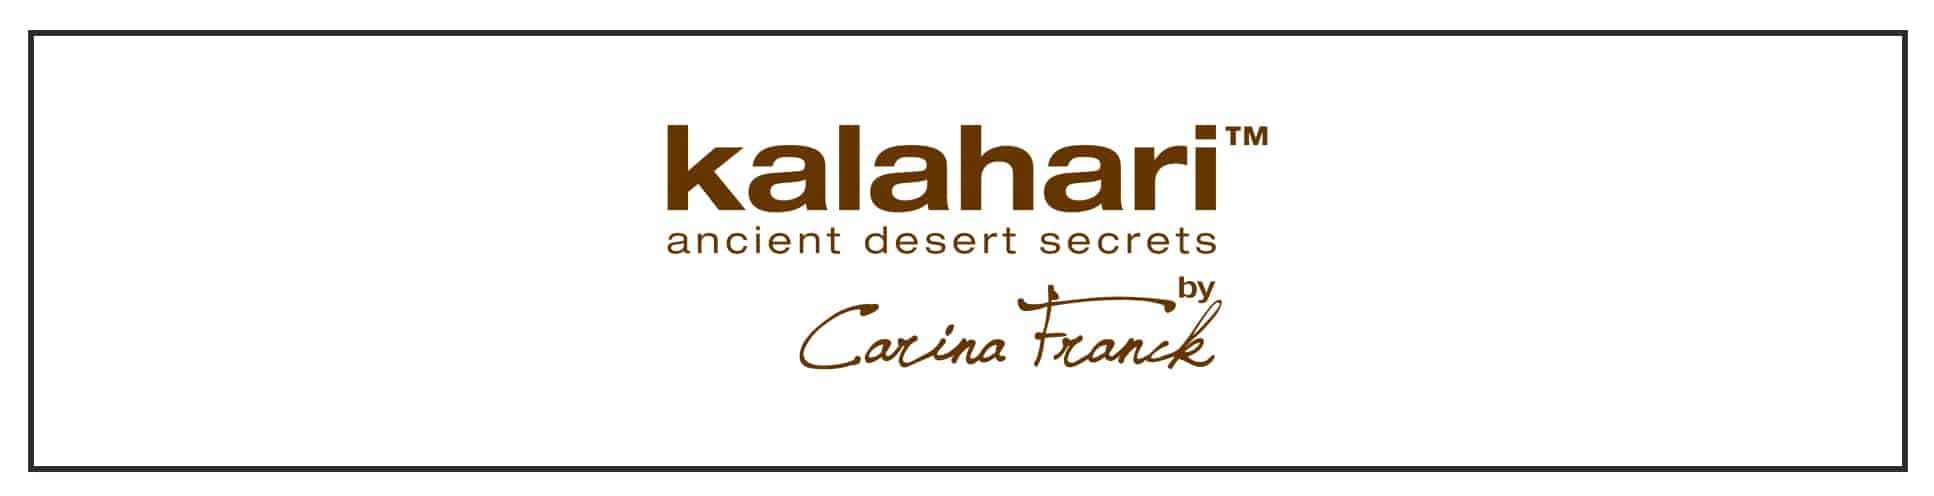 The logo for kalahar's ancient desert services.